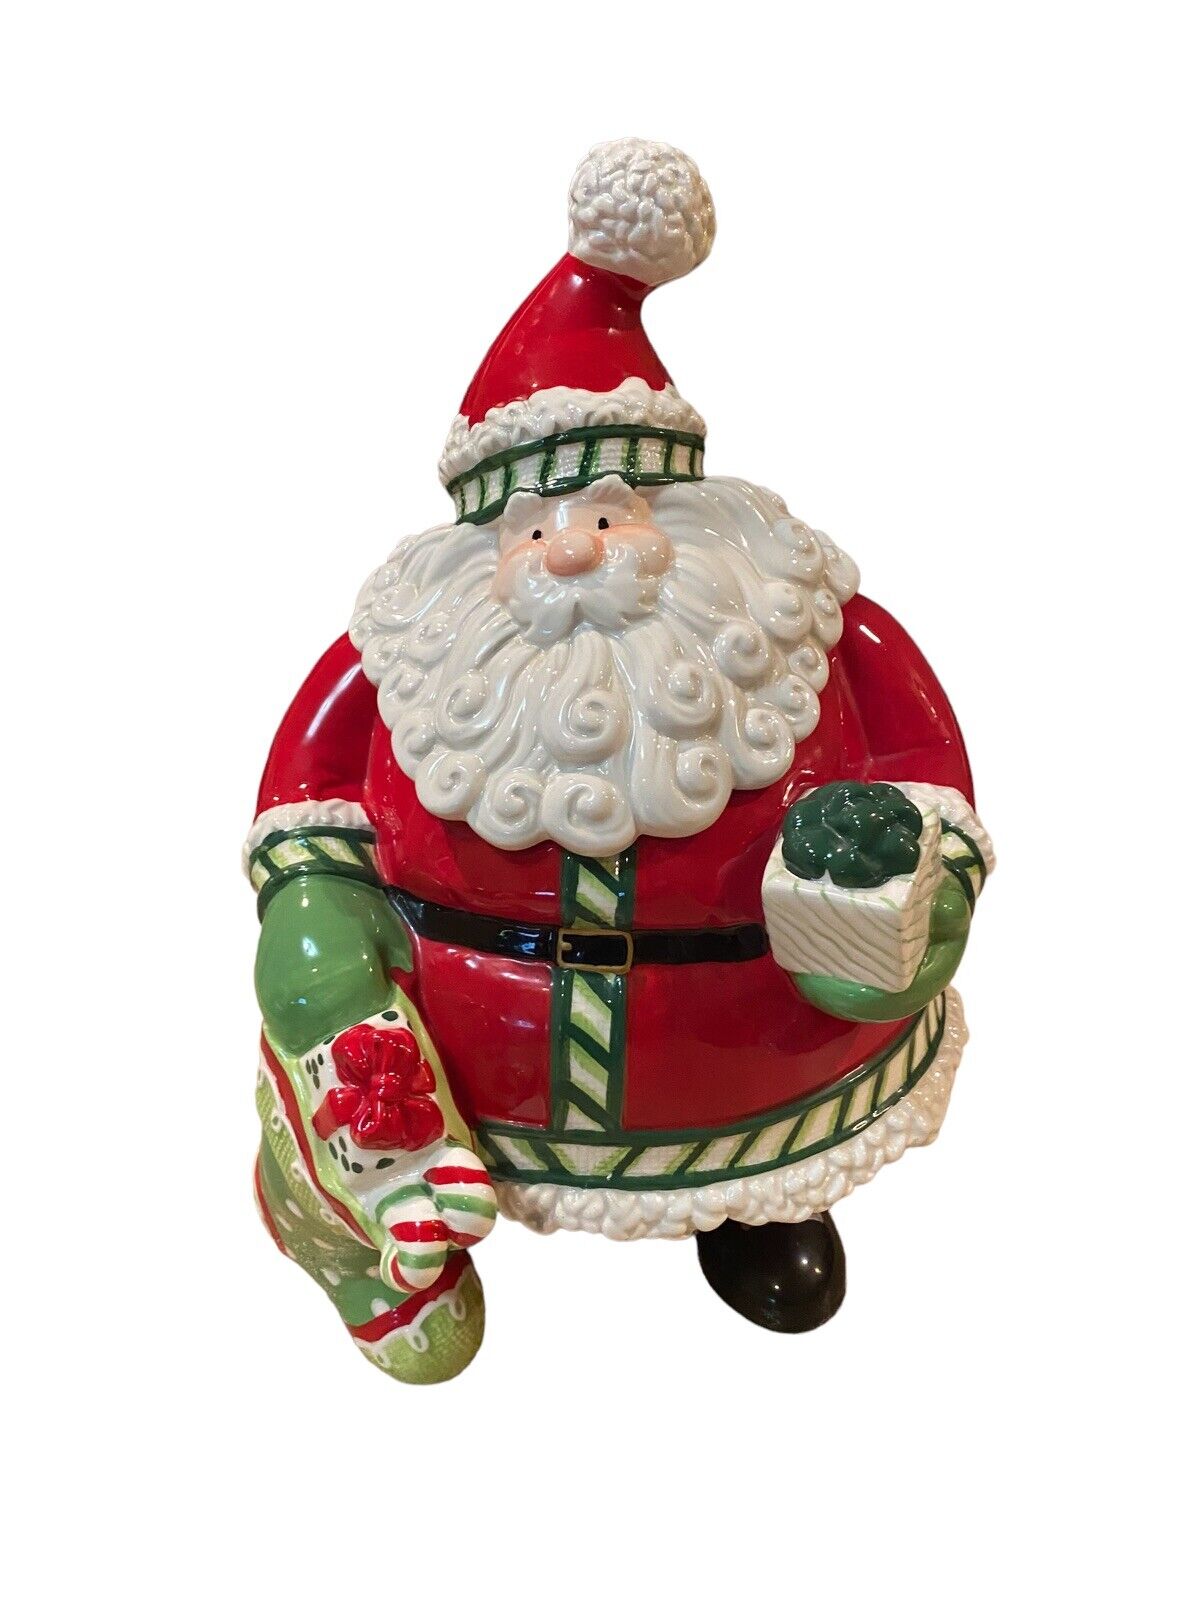 Fitz & Floyd Stocking Stuffers Santa Claus Cookie Jar Christmas LARGE 2007